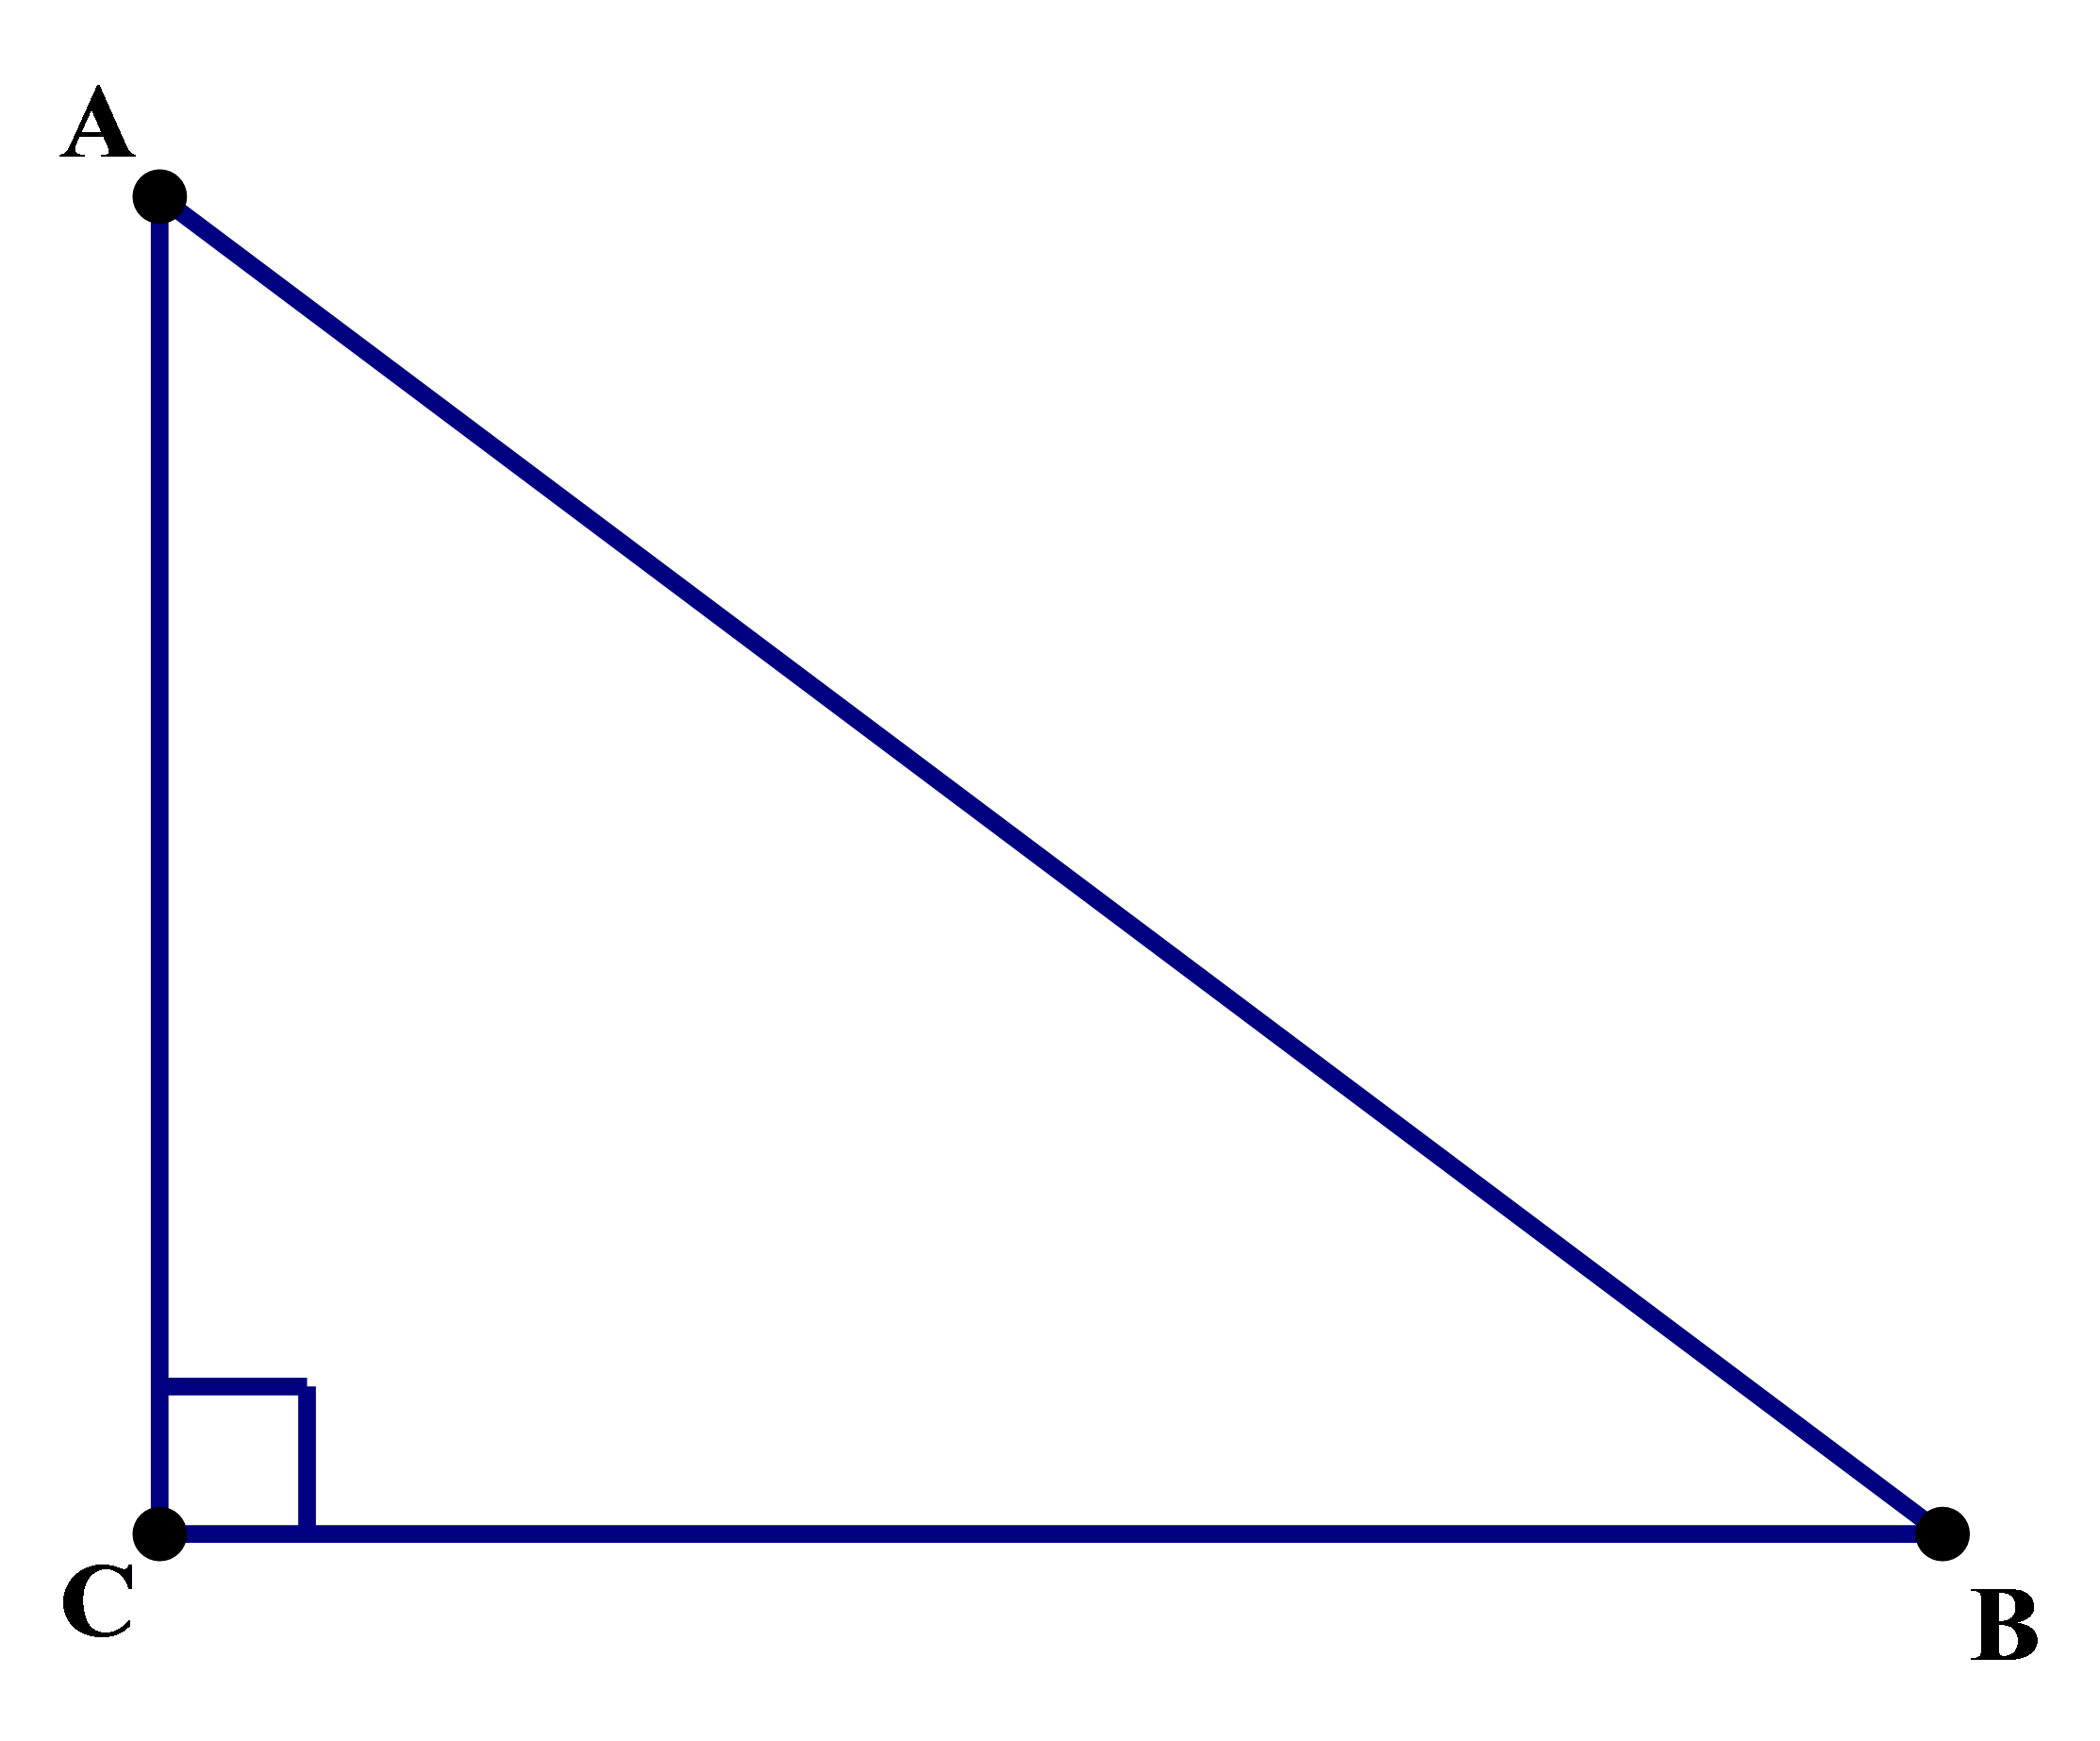 Right Angled Triangle. Прямоугольный треугольник. Прямоугольный треугольник рисунок. Треугольник с прямым углом.